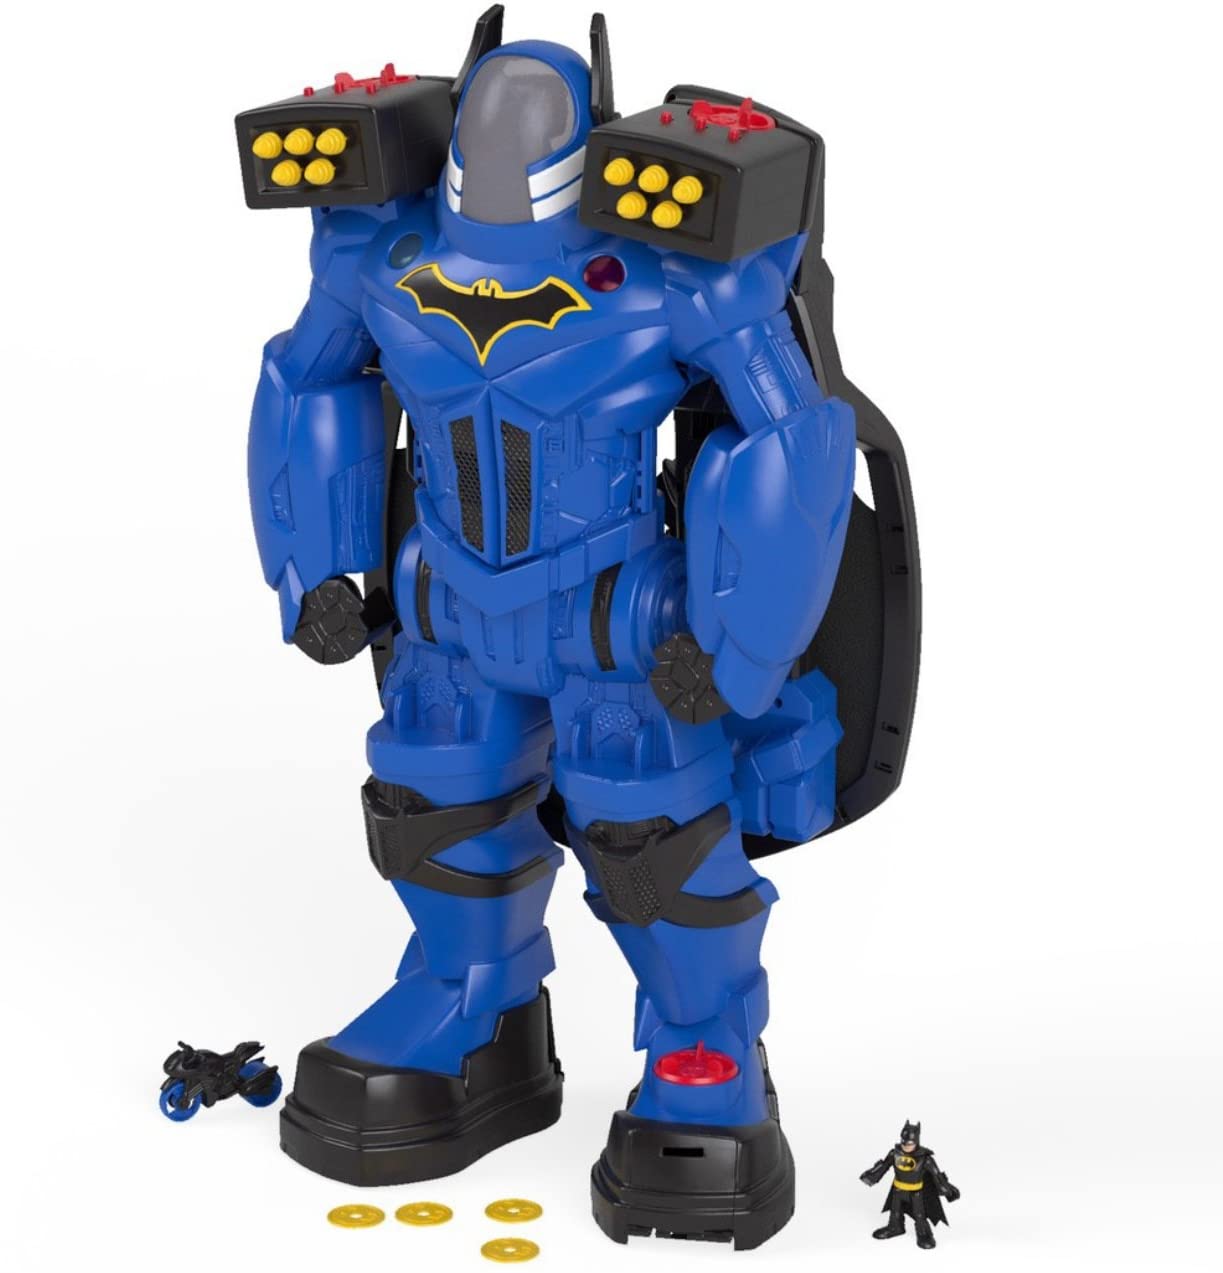 Fisher-Price Imaginext DC Super Friends Batbot Xtreme-Best Batman Toys for Kids